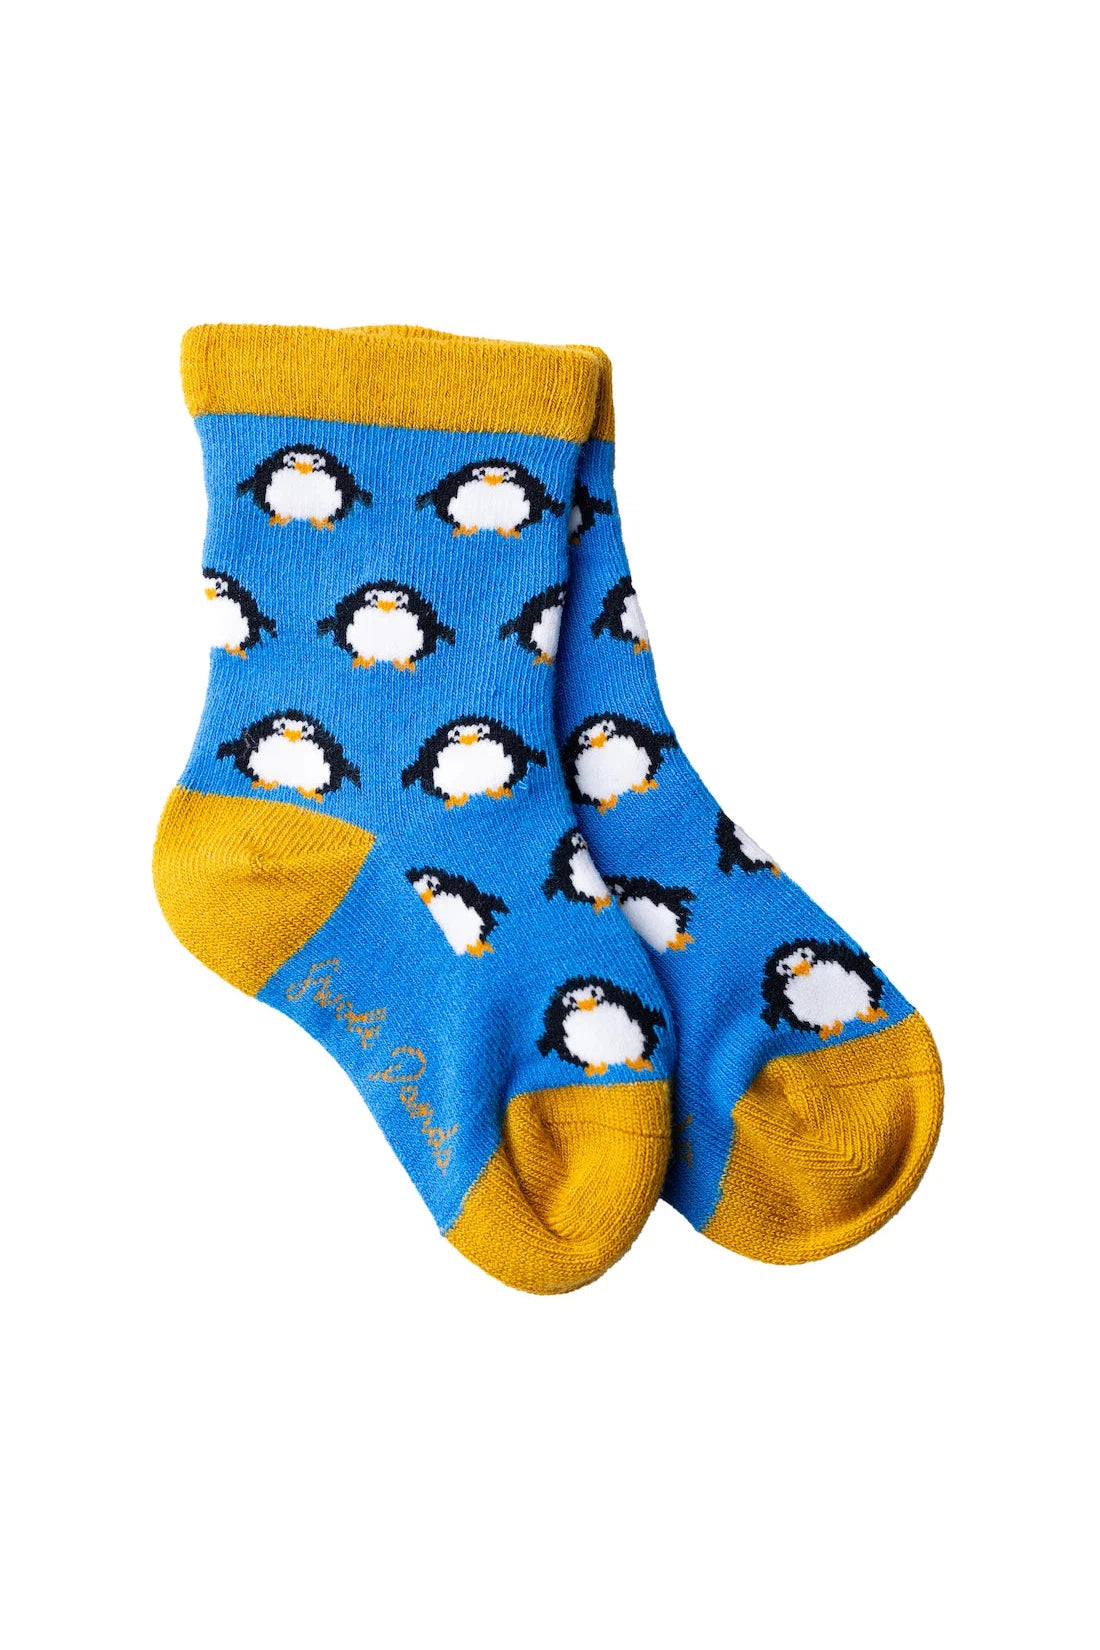 Swole Panda Kids Penguin Bamboo Socks-Kids-Ohh! By Gum - Shop Sustainable